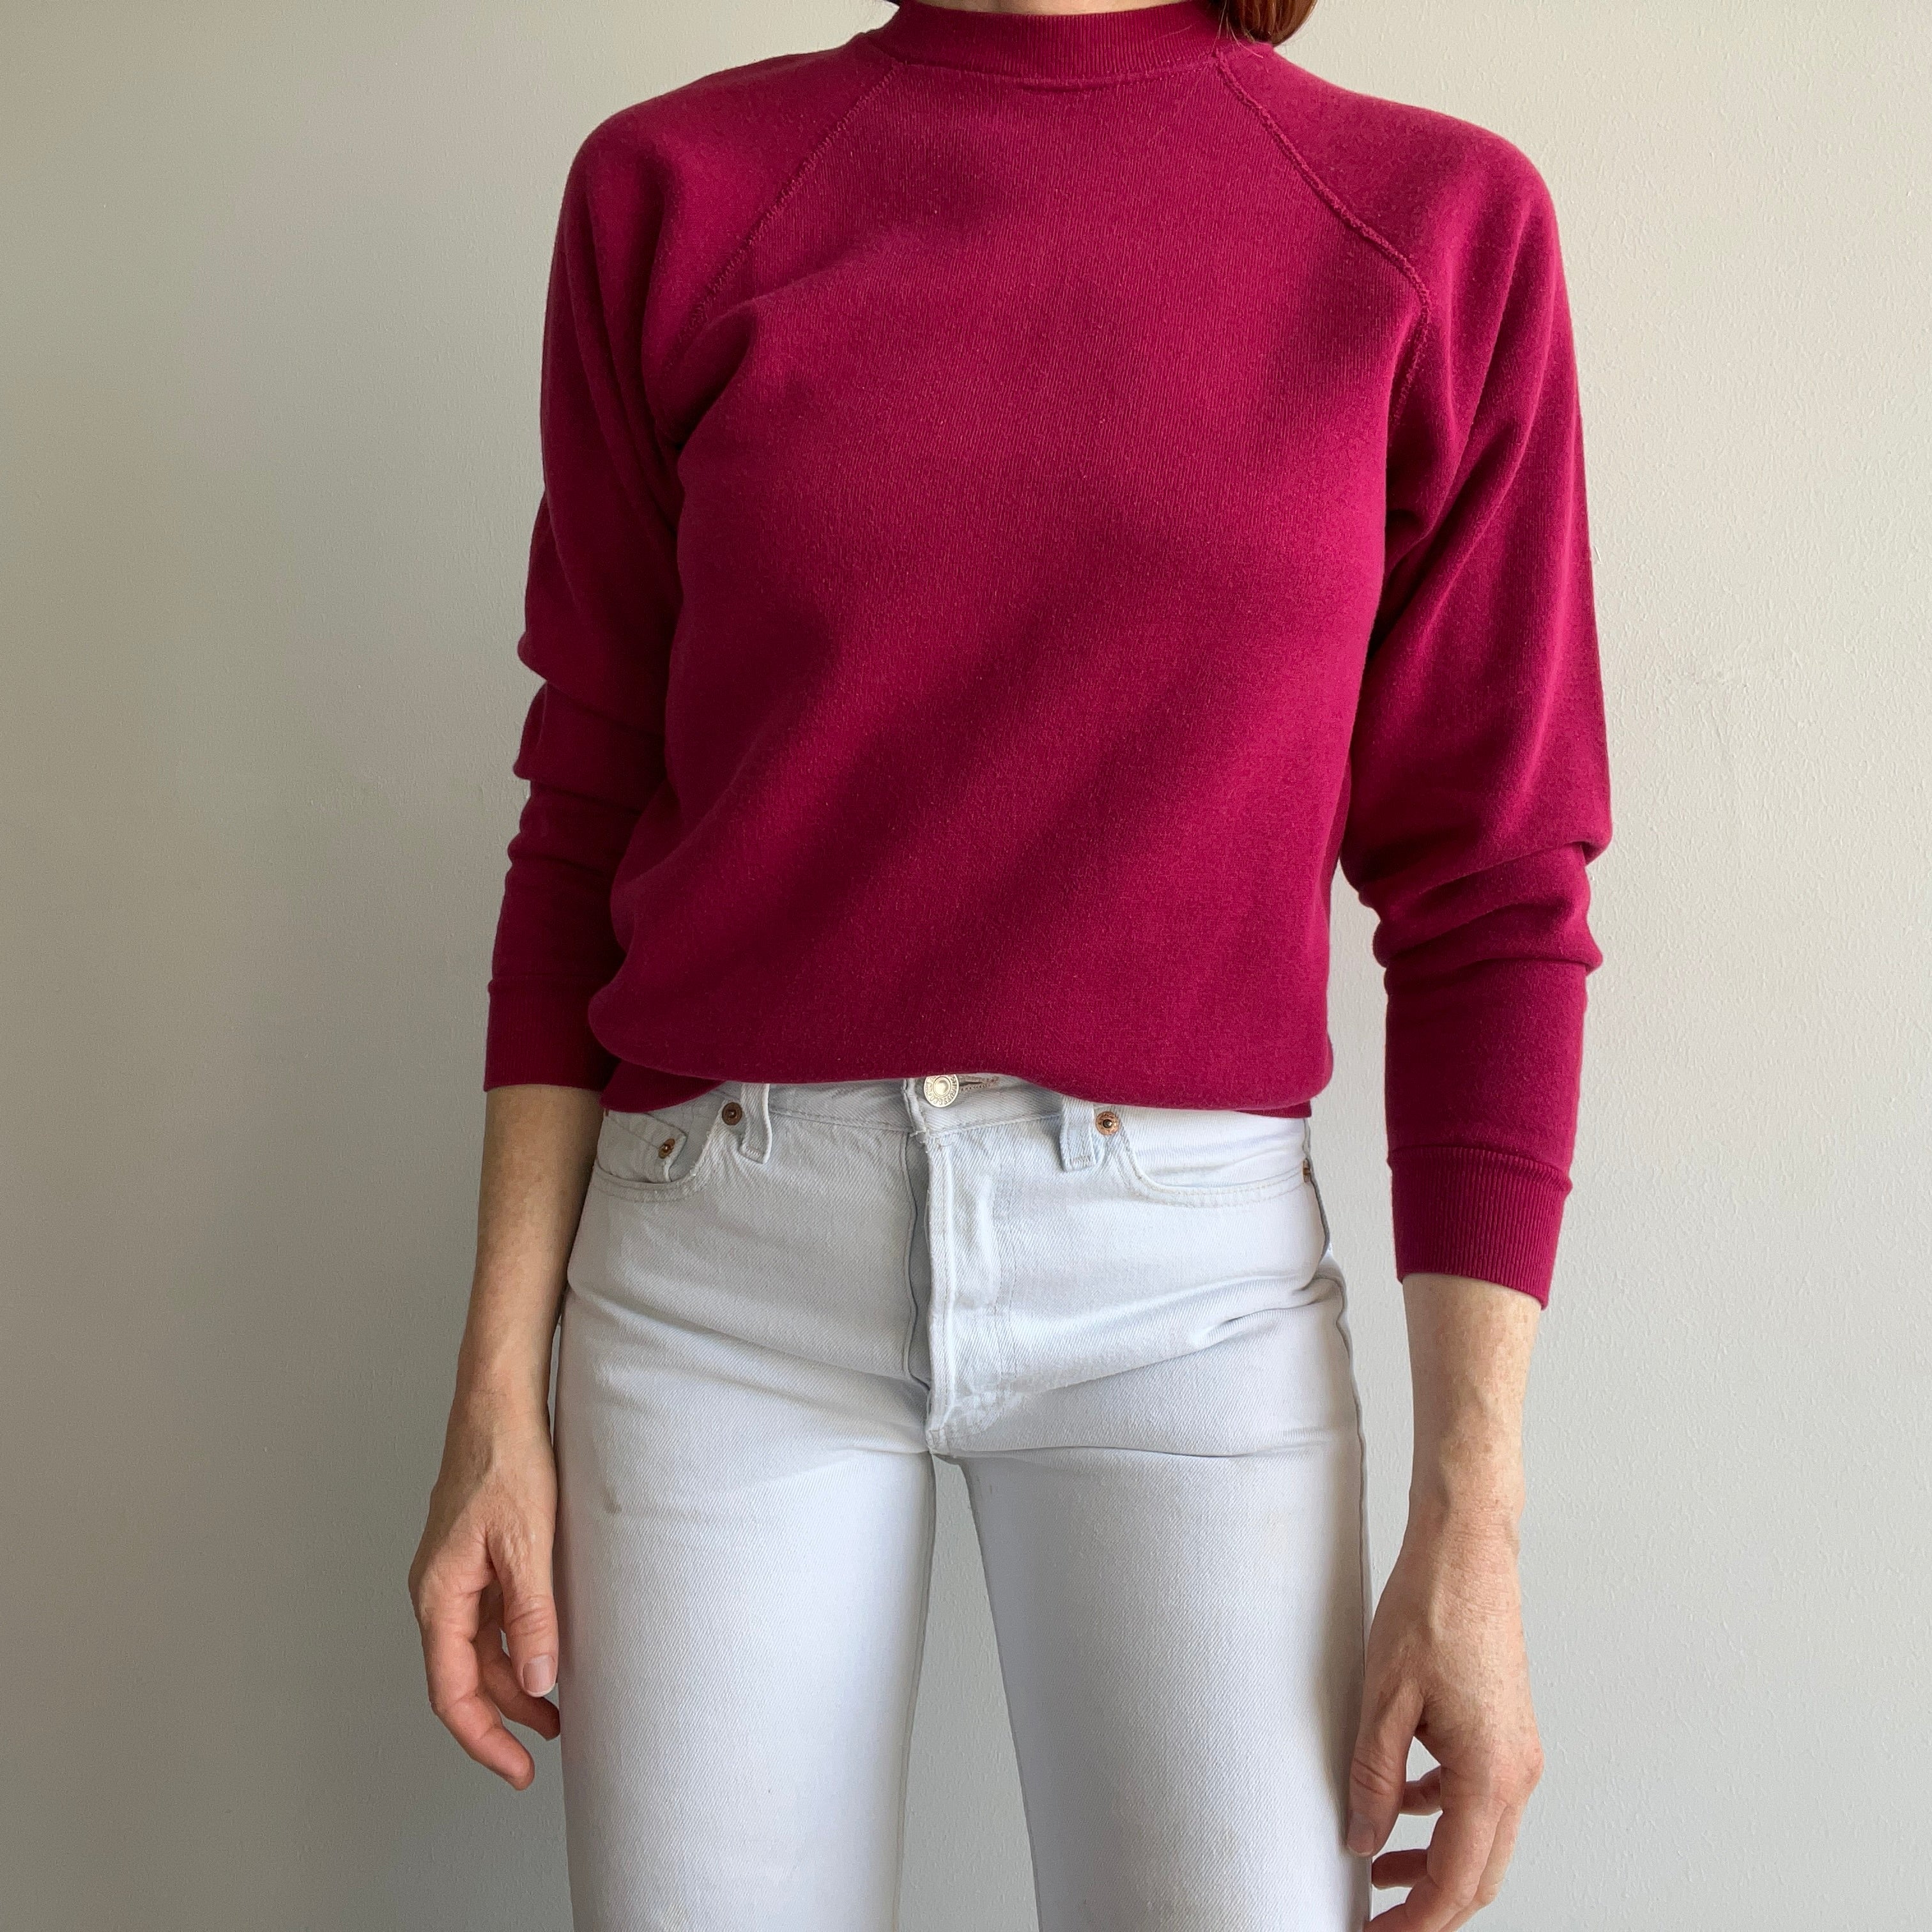 1980s Magenta Pink Smaller Size Raglan Sweatshirt